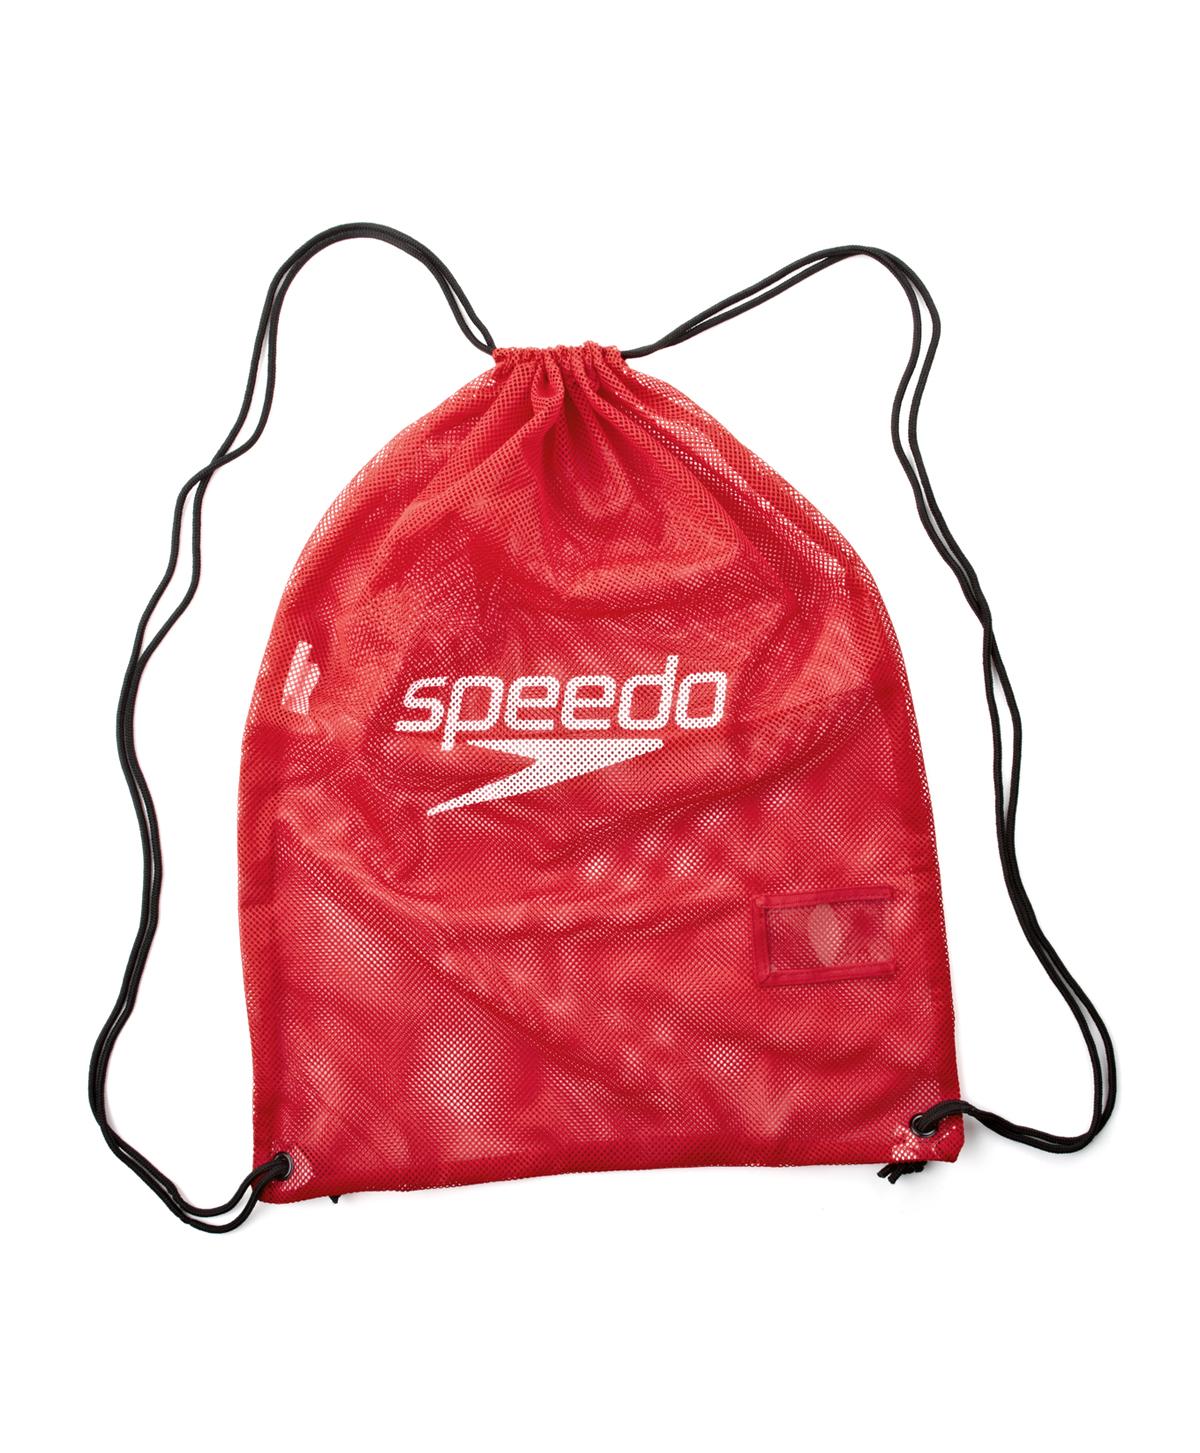 Speedo Equipment Mesh Drawstring Bag - Red